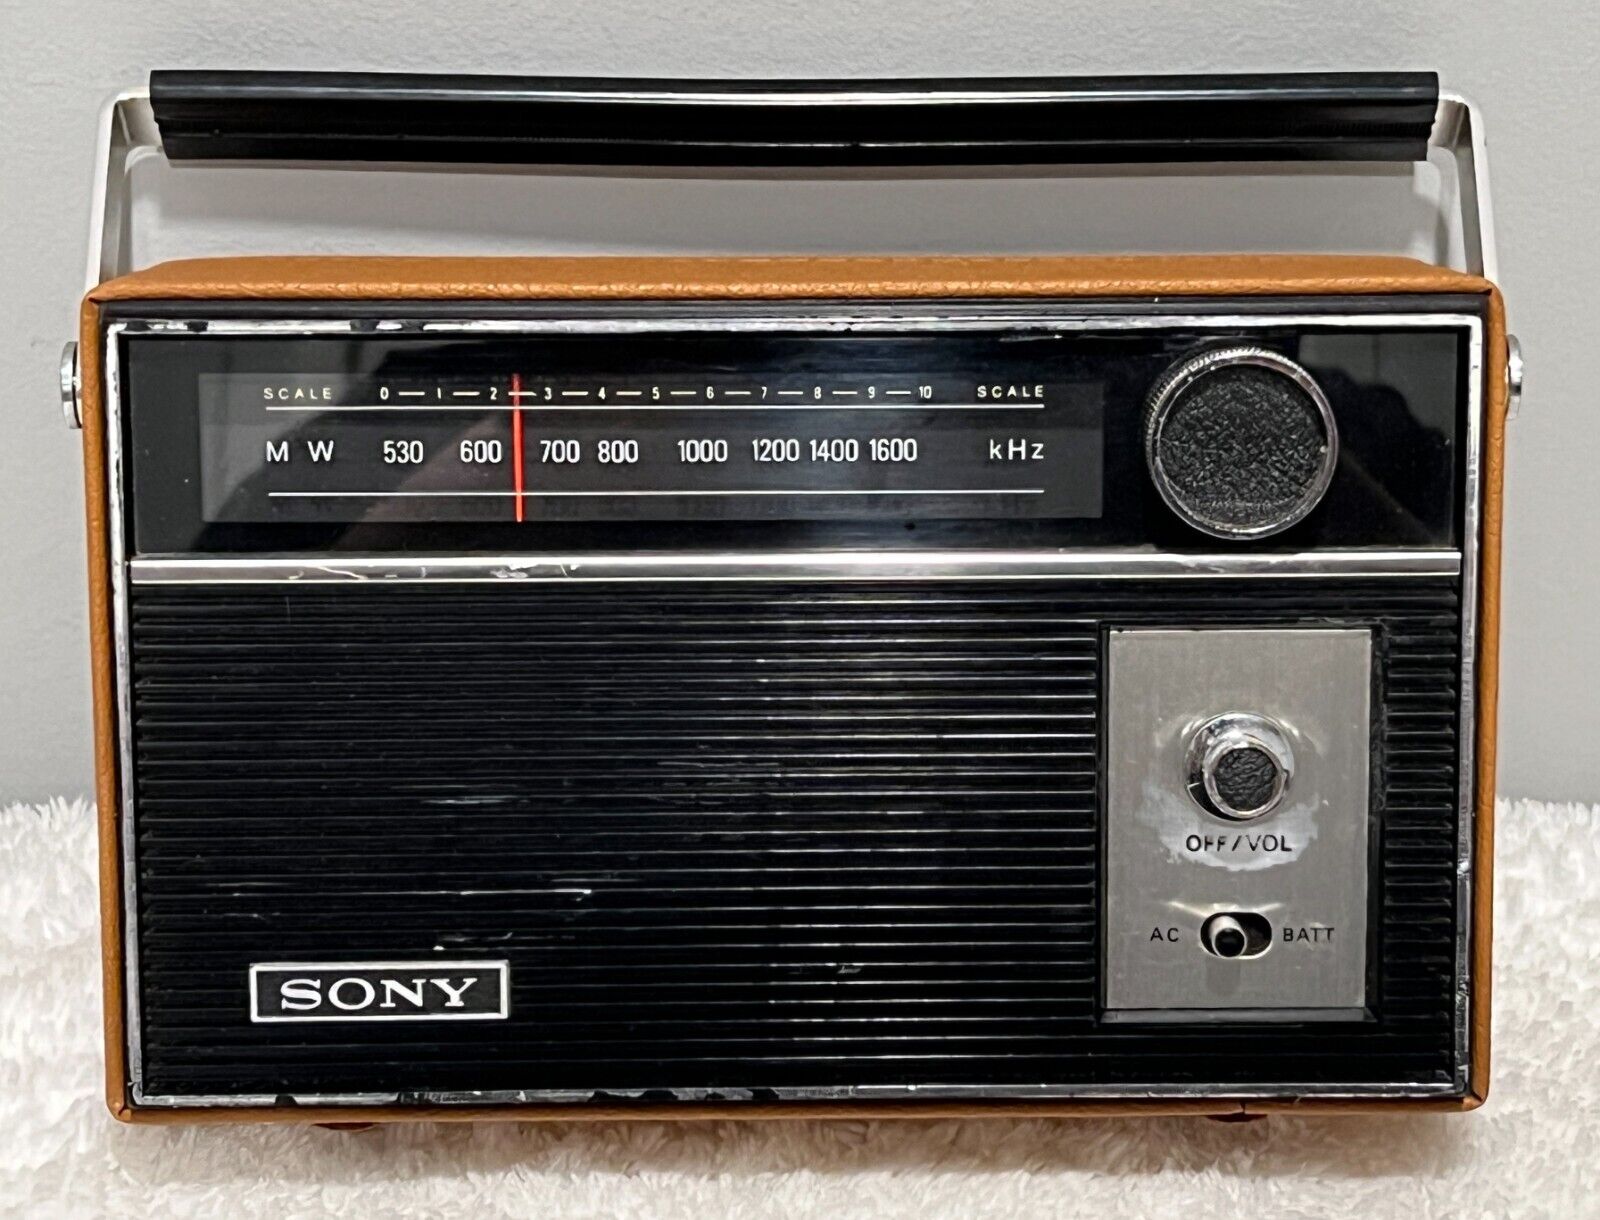 Vintage SONY 7-Transistor AM Radio - Brown Leather - Model 6R-26 (Japan) - WORKS